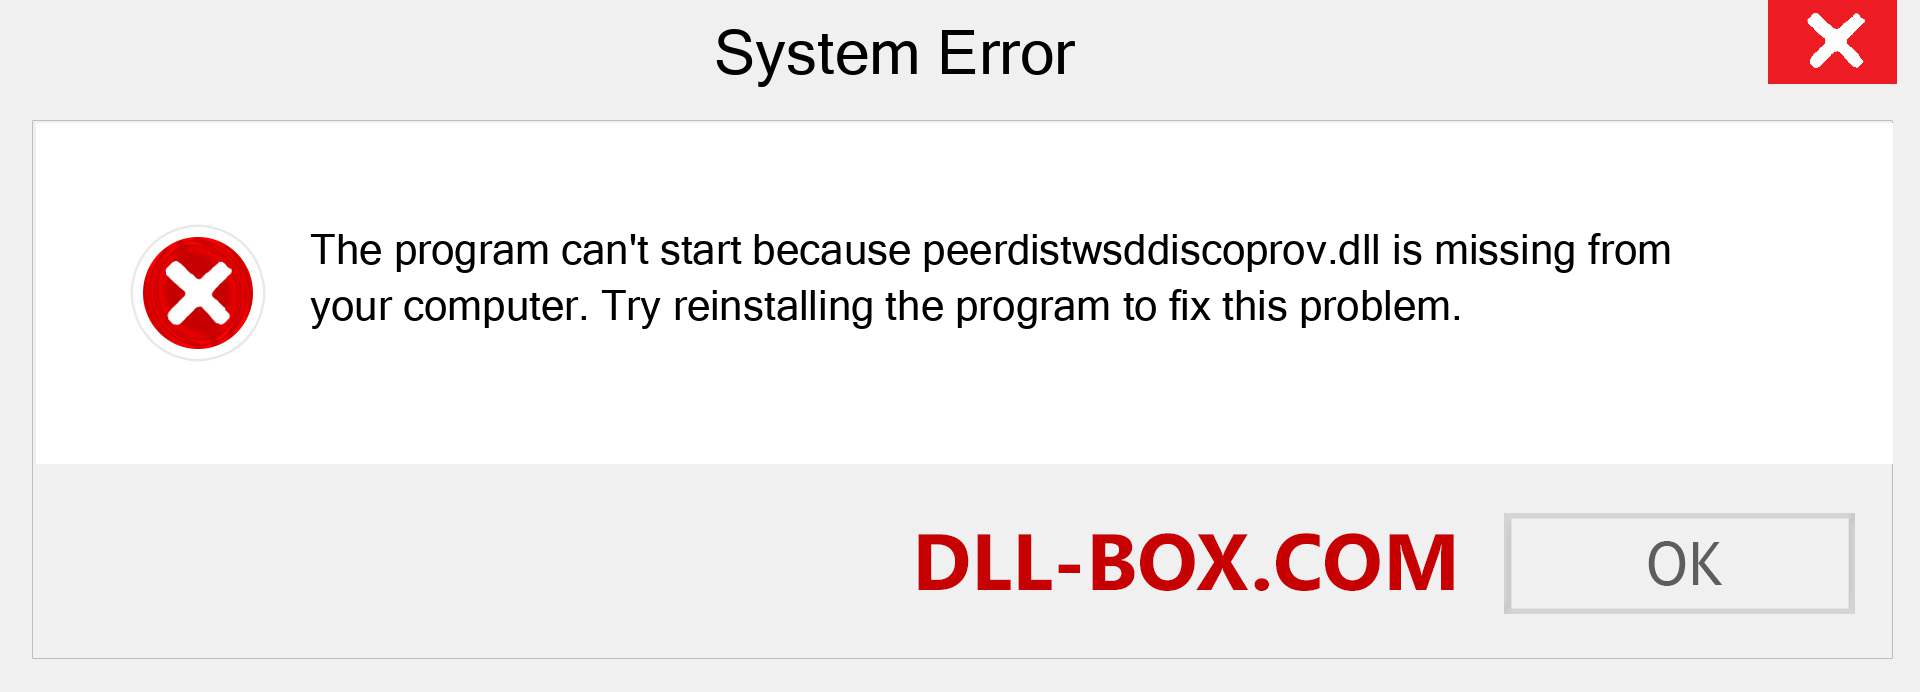  peerdistwsddiscoprov.dll file is missing?. Download for Windows 7, 8, 10 - Fix  peerdistwsddiscoprov dll Missing Error on Windows, photos, images